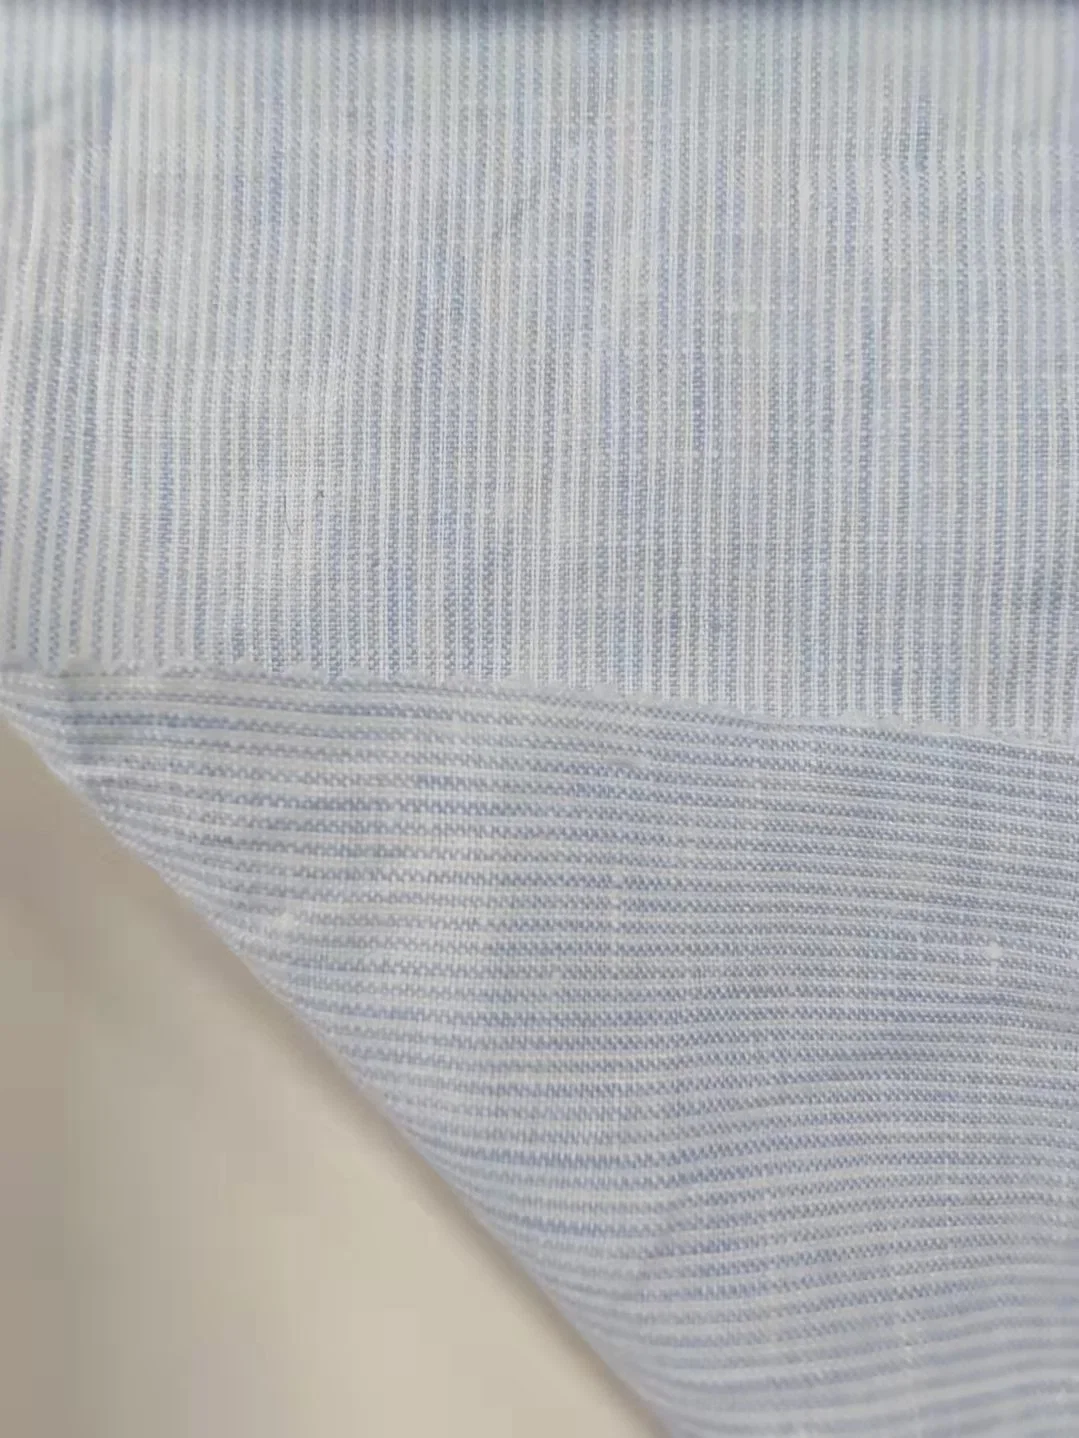 Pinstriped de alta calidad 100% lino tejido de prendas de vestir camisas de lino puro Fabric